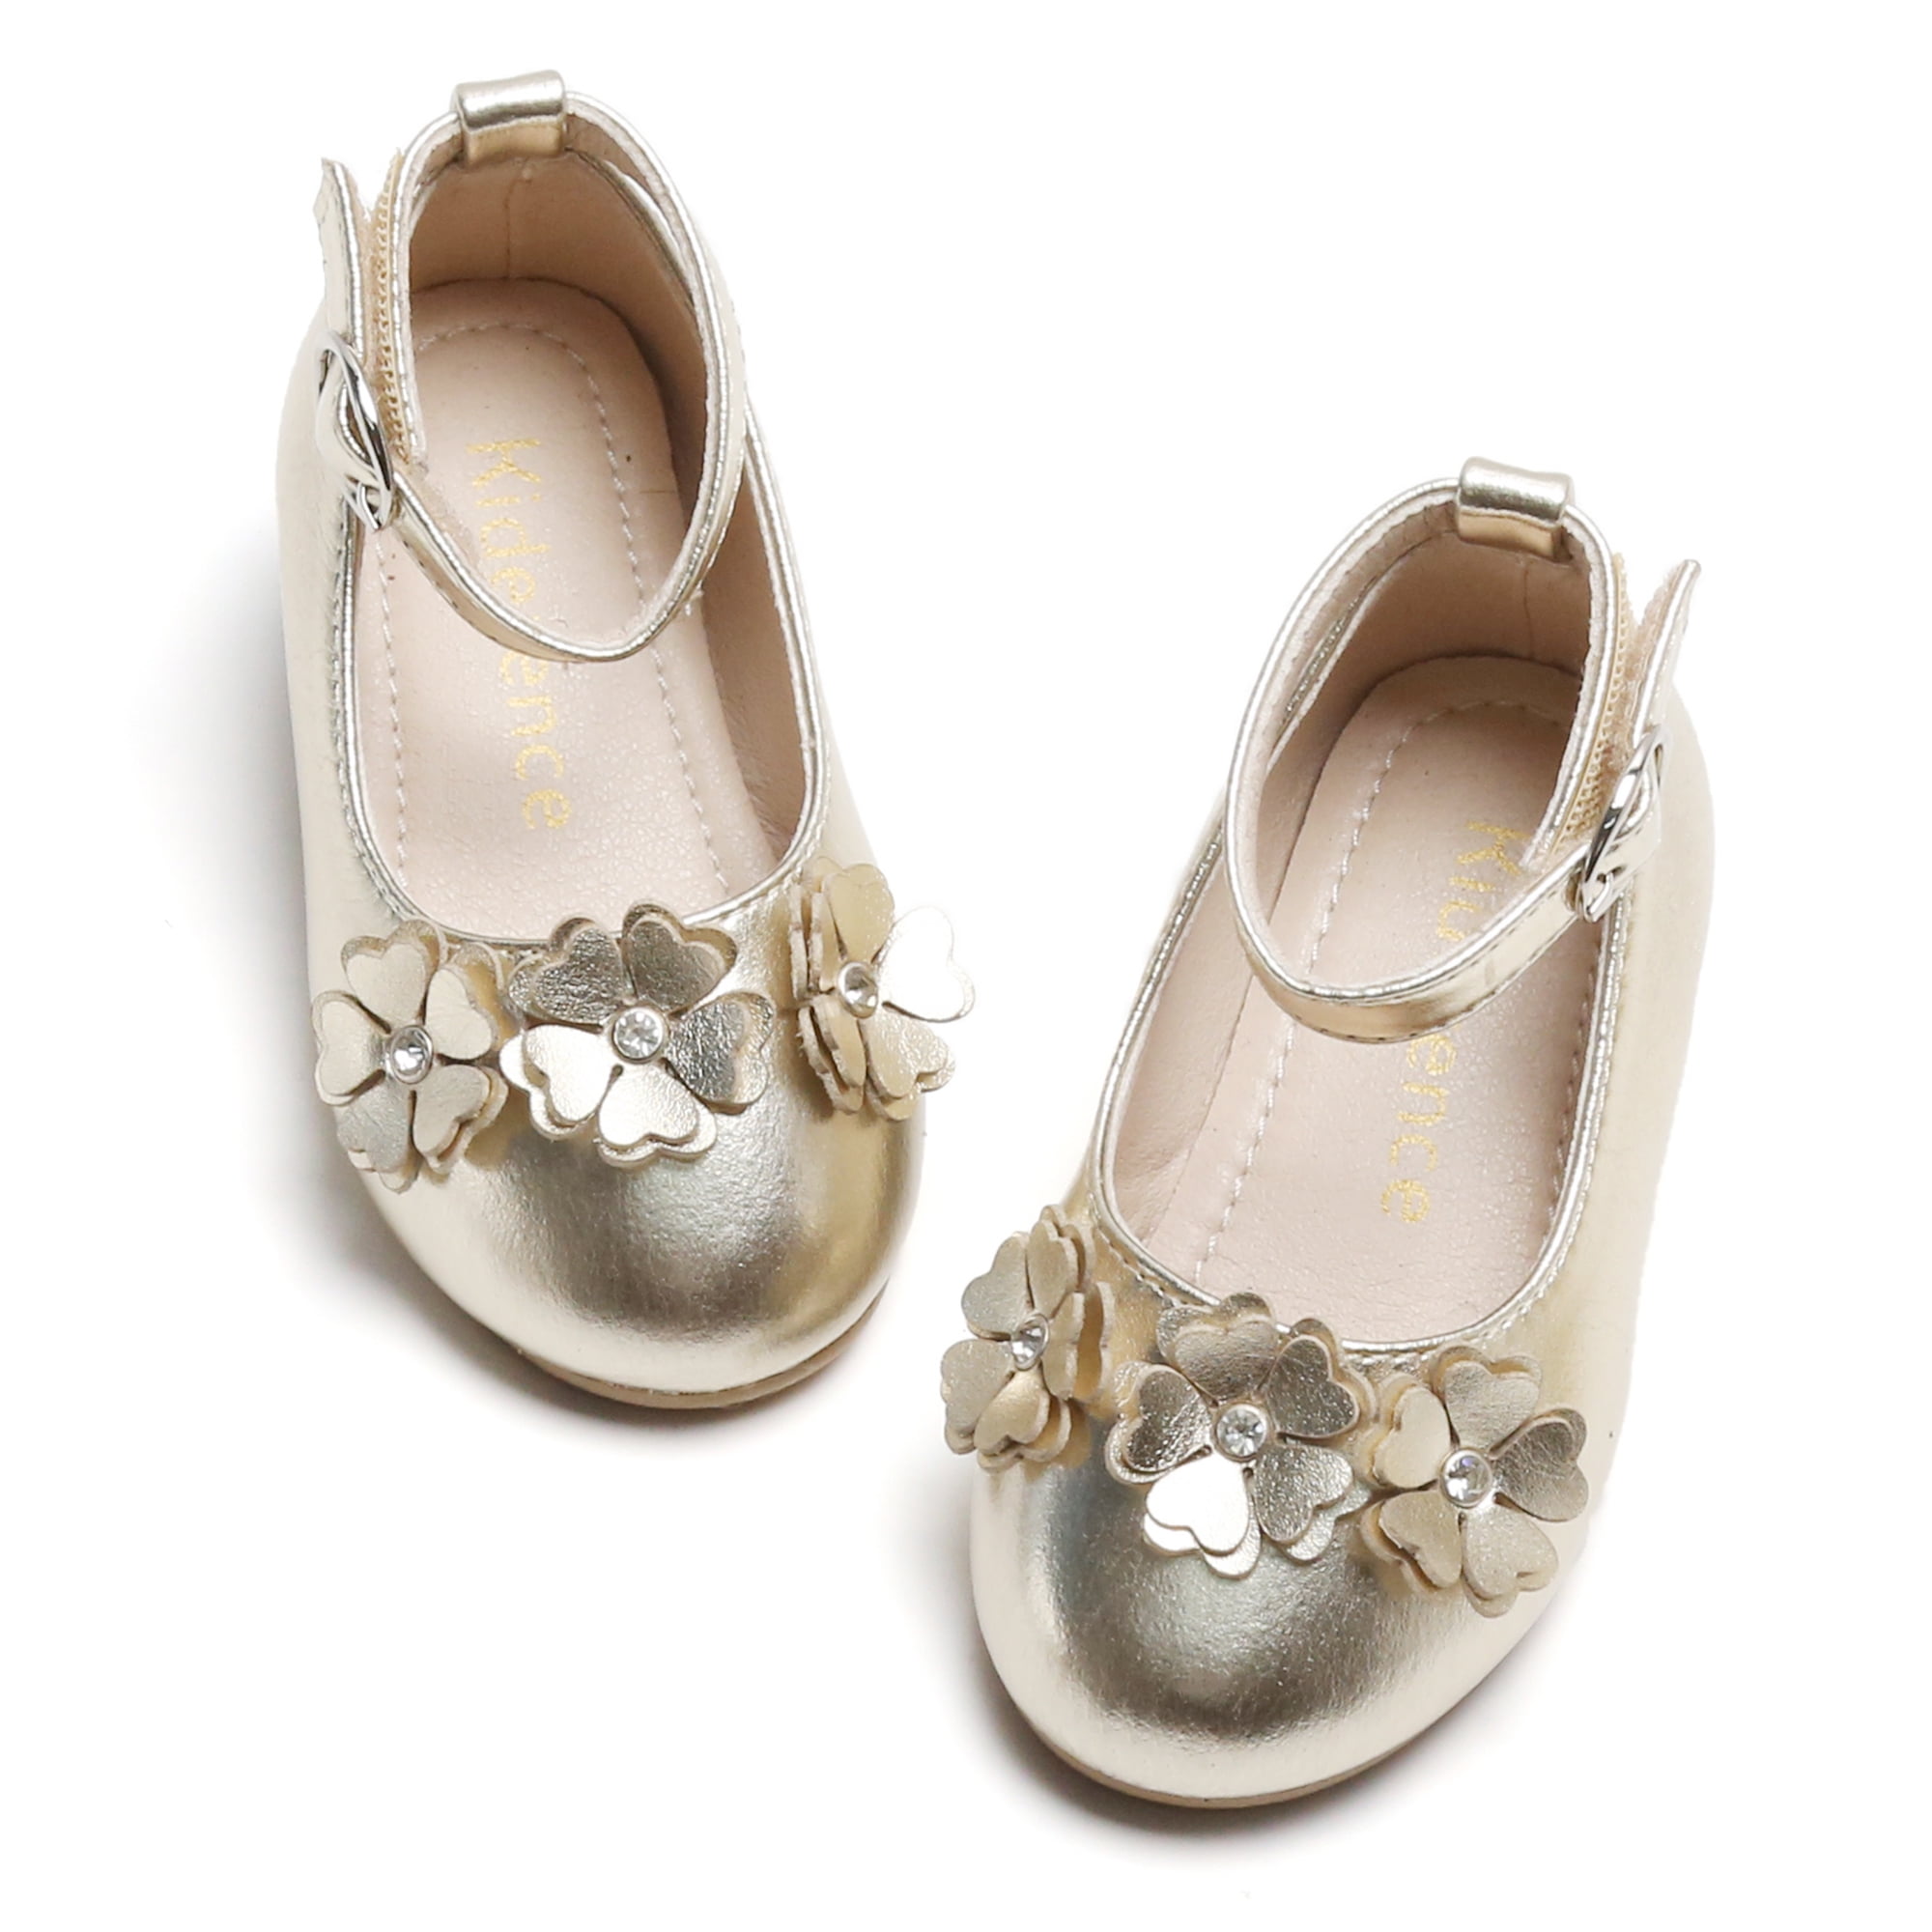 Kiderence Girls Flat Mary Jane Shoes Slip-on School Party Dress Ballerina Shoe Toddler/Little Kids 